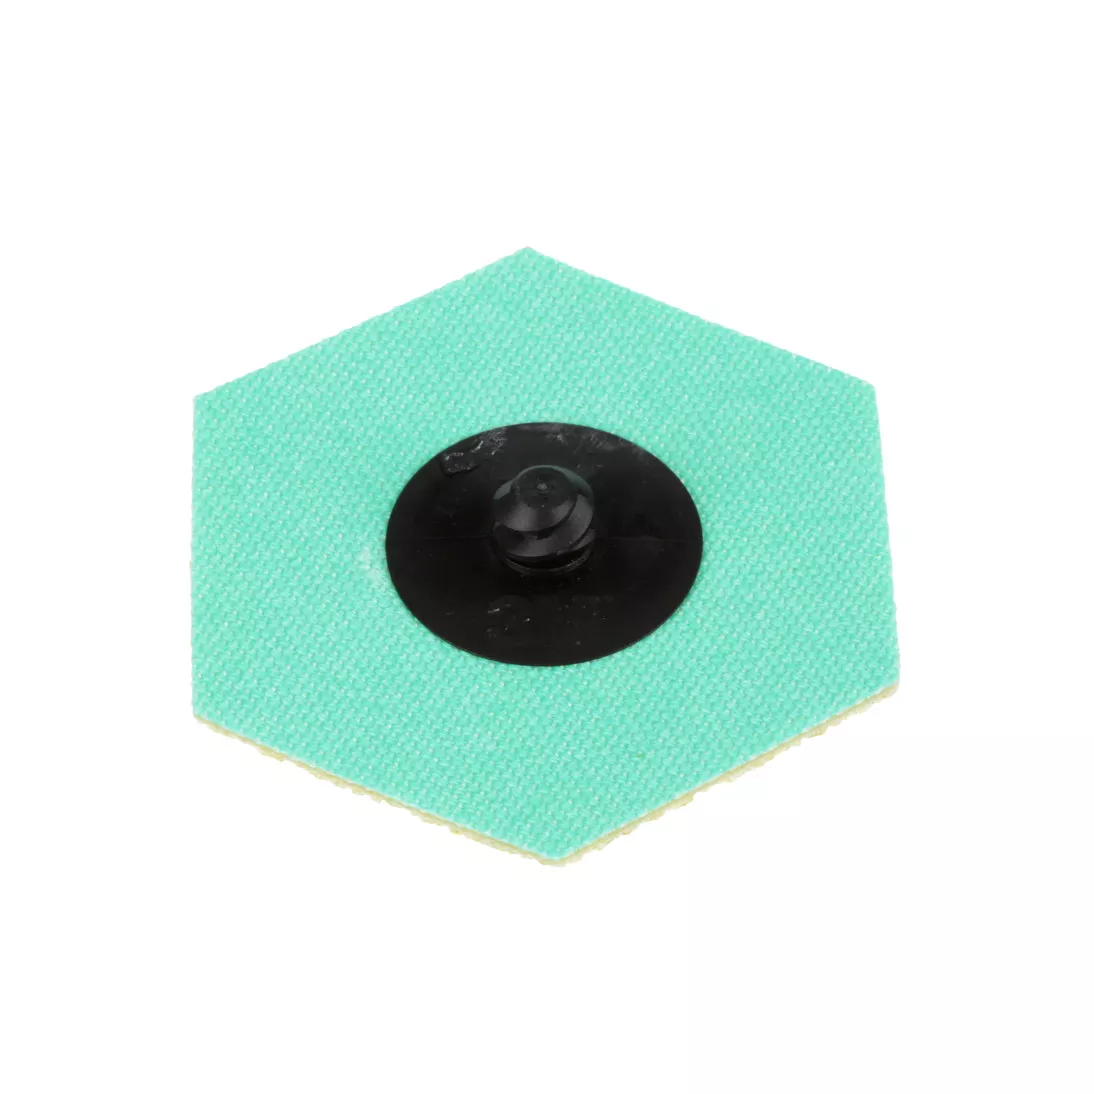 3M™ Roloc™ Diamond Cloth Disc 674W, 120 Mesh, TR, Light Yellow, 3 in,
Hexagon, Die HX300